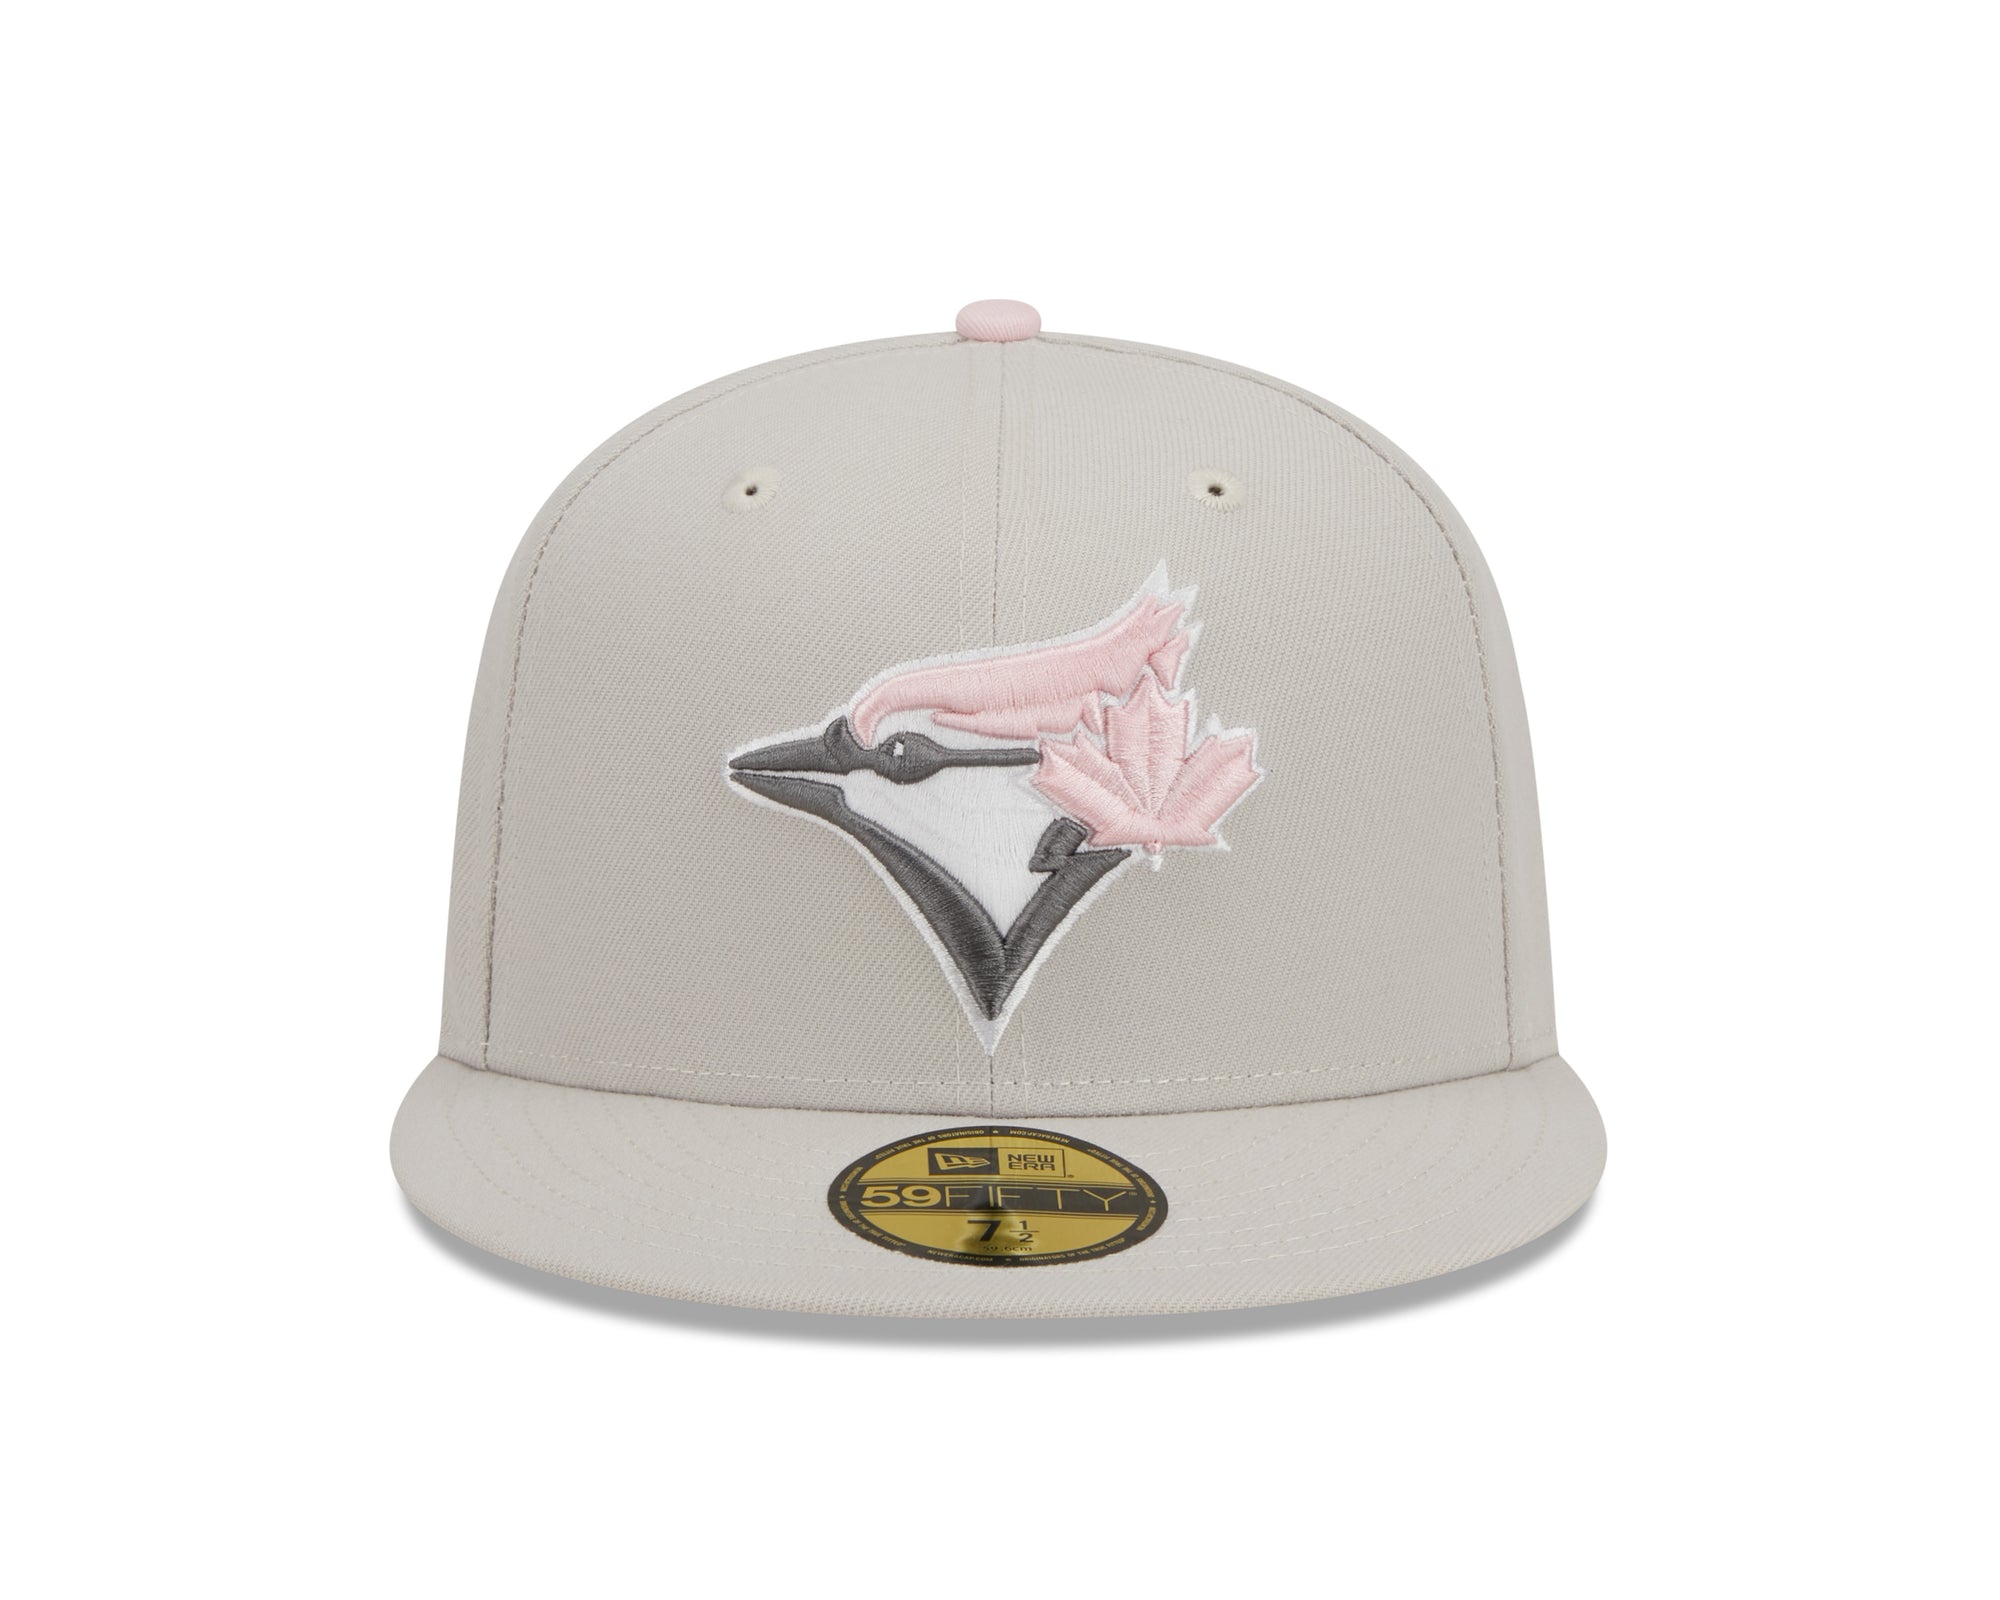 Toronto Blue Jays MLB New Era 59FIFTY Fitted Hat-Royal/White Size